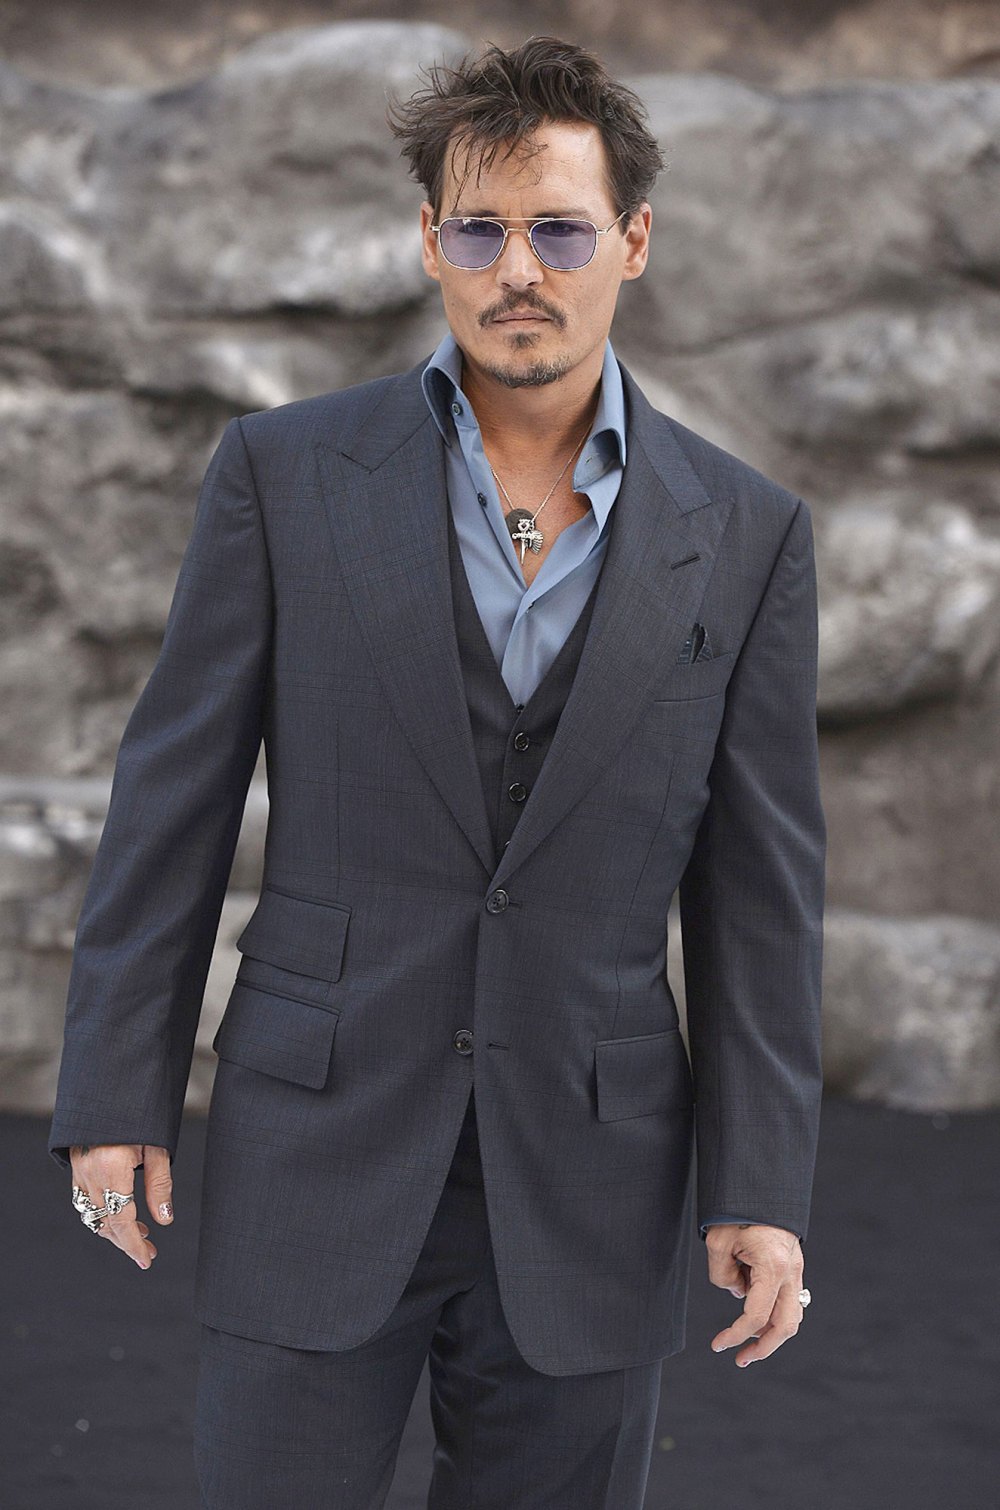 Johnny Depp Finally Addresses Vanessa Paradis Split: "It Wasn't Easy"